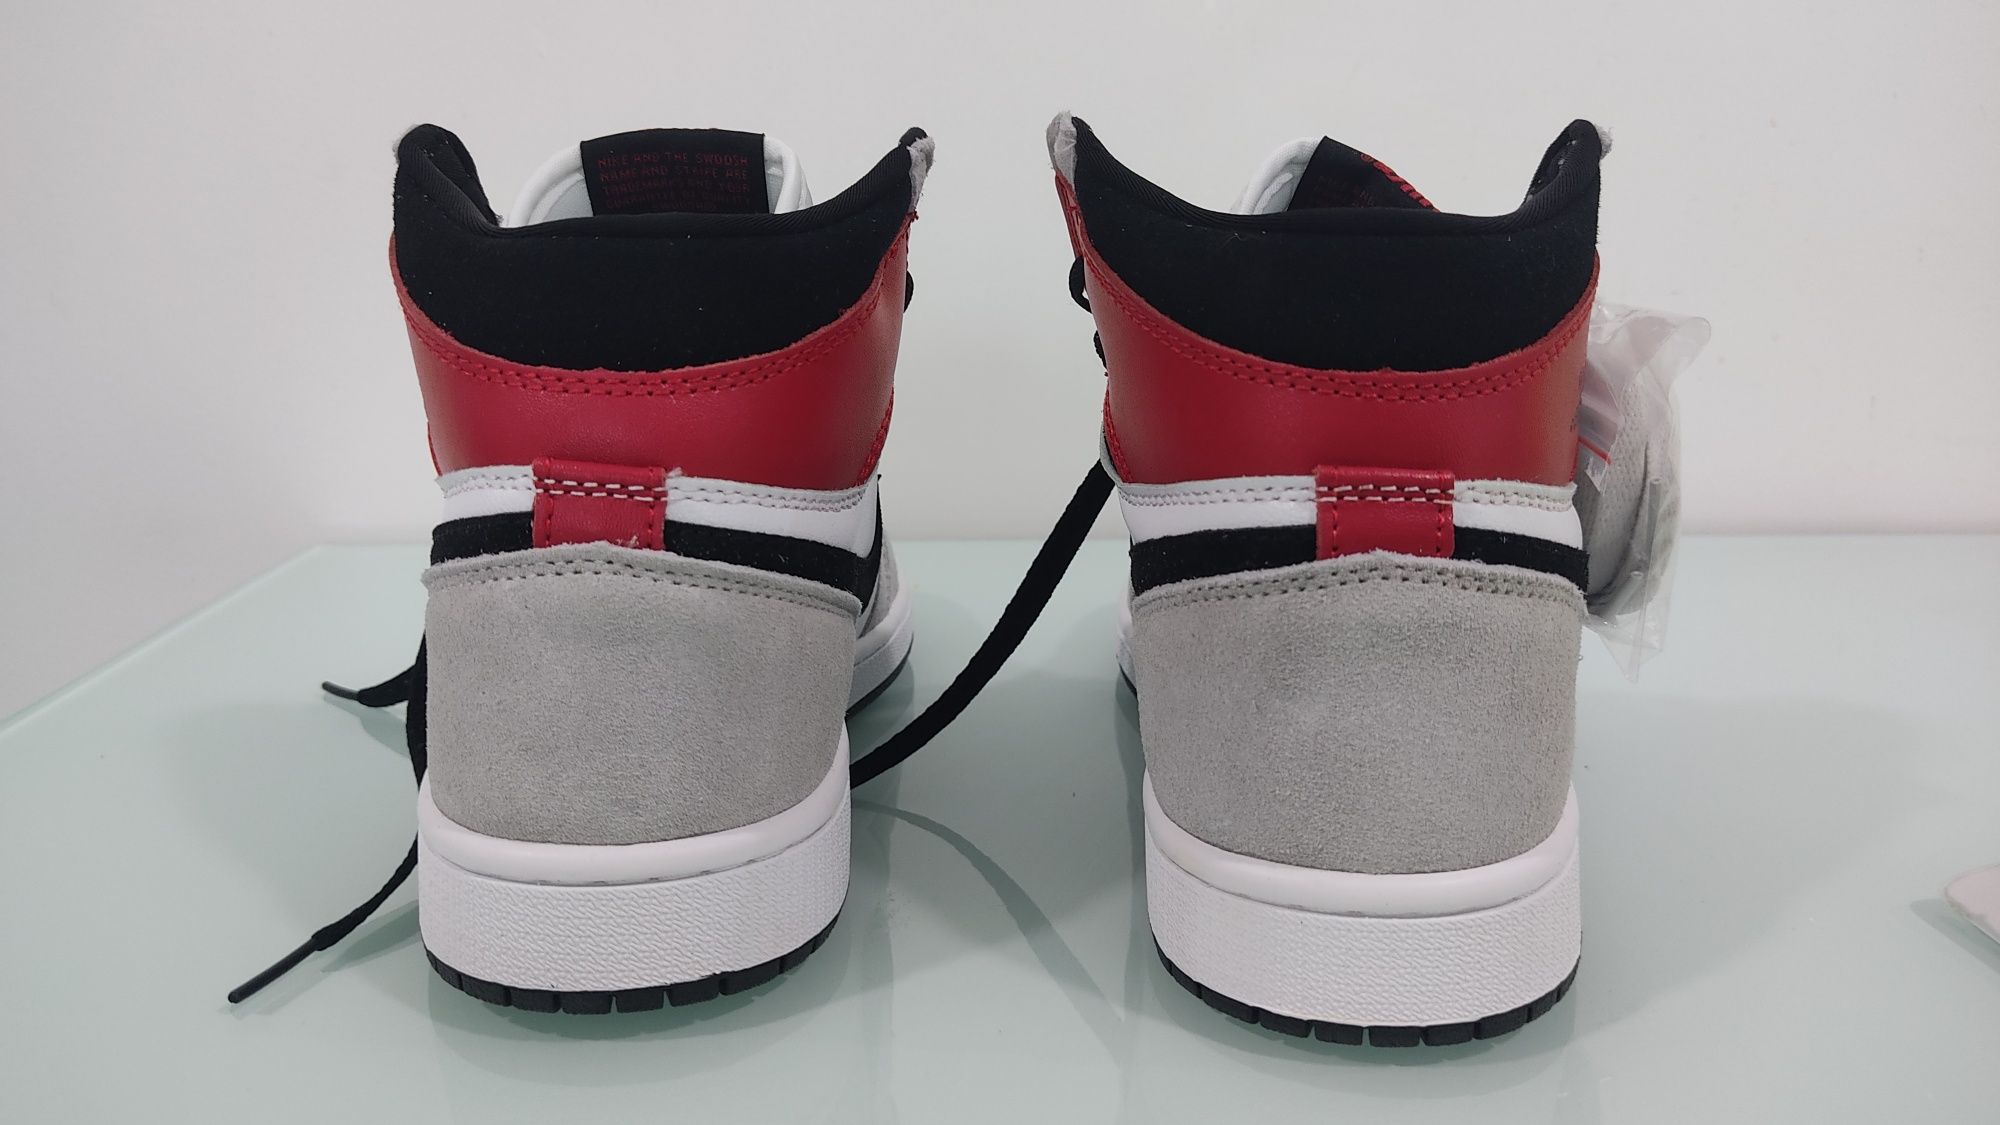 Nike Air Jordan 1 light smoke grey high (NOVAS)